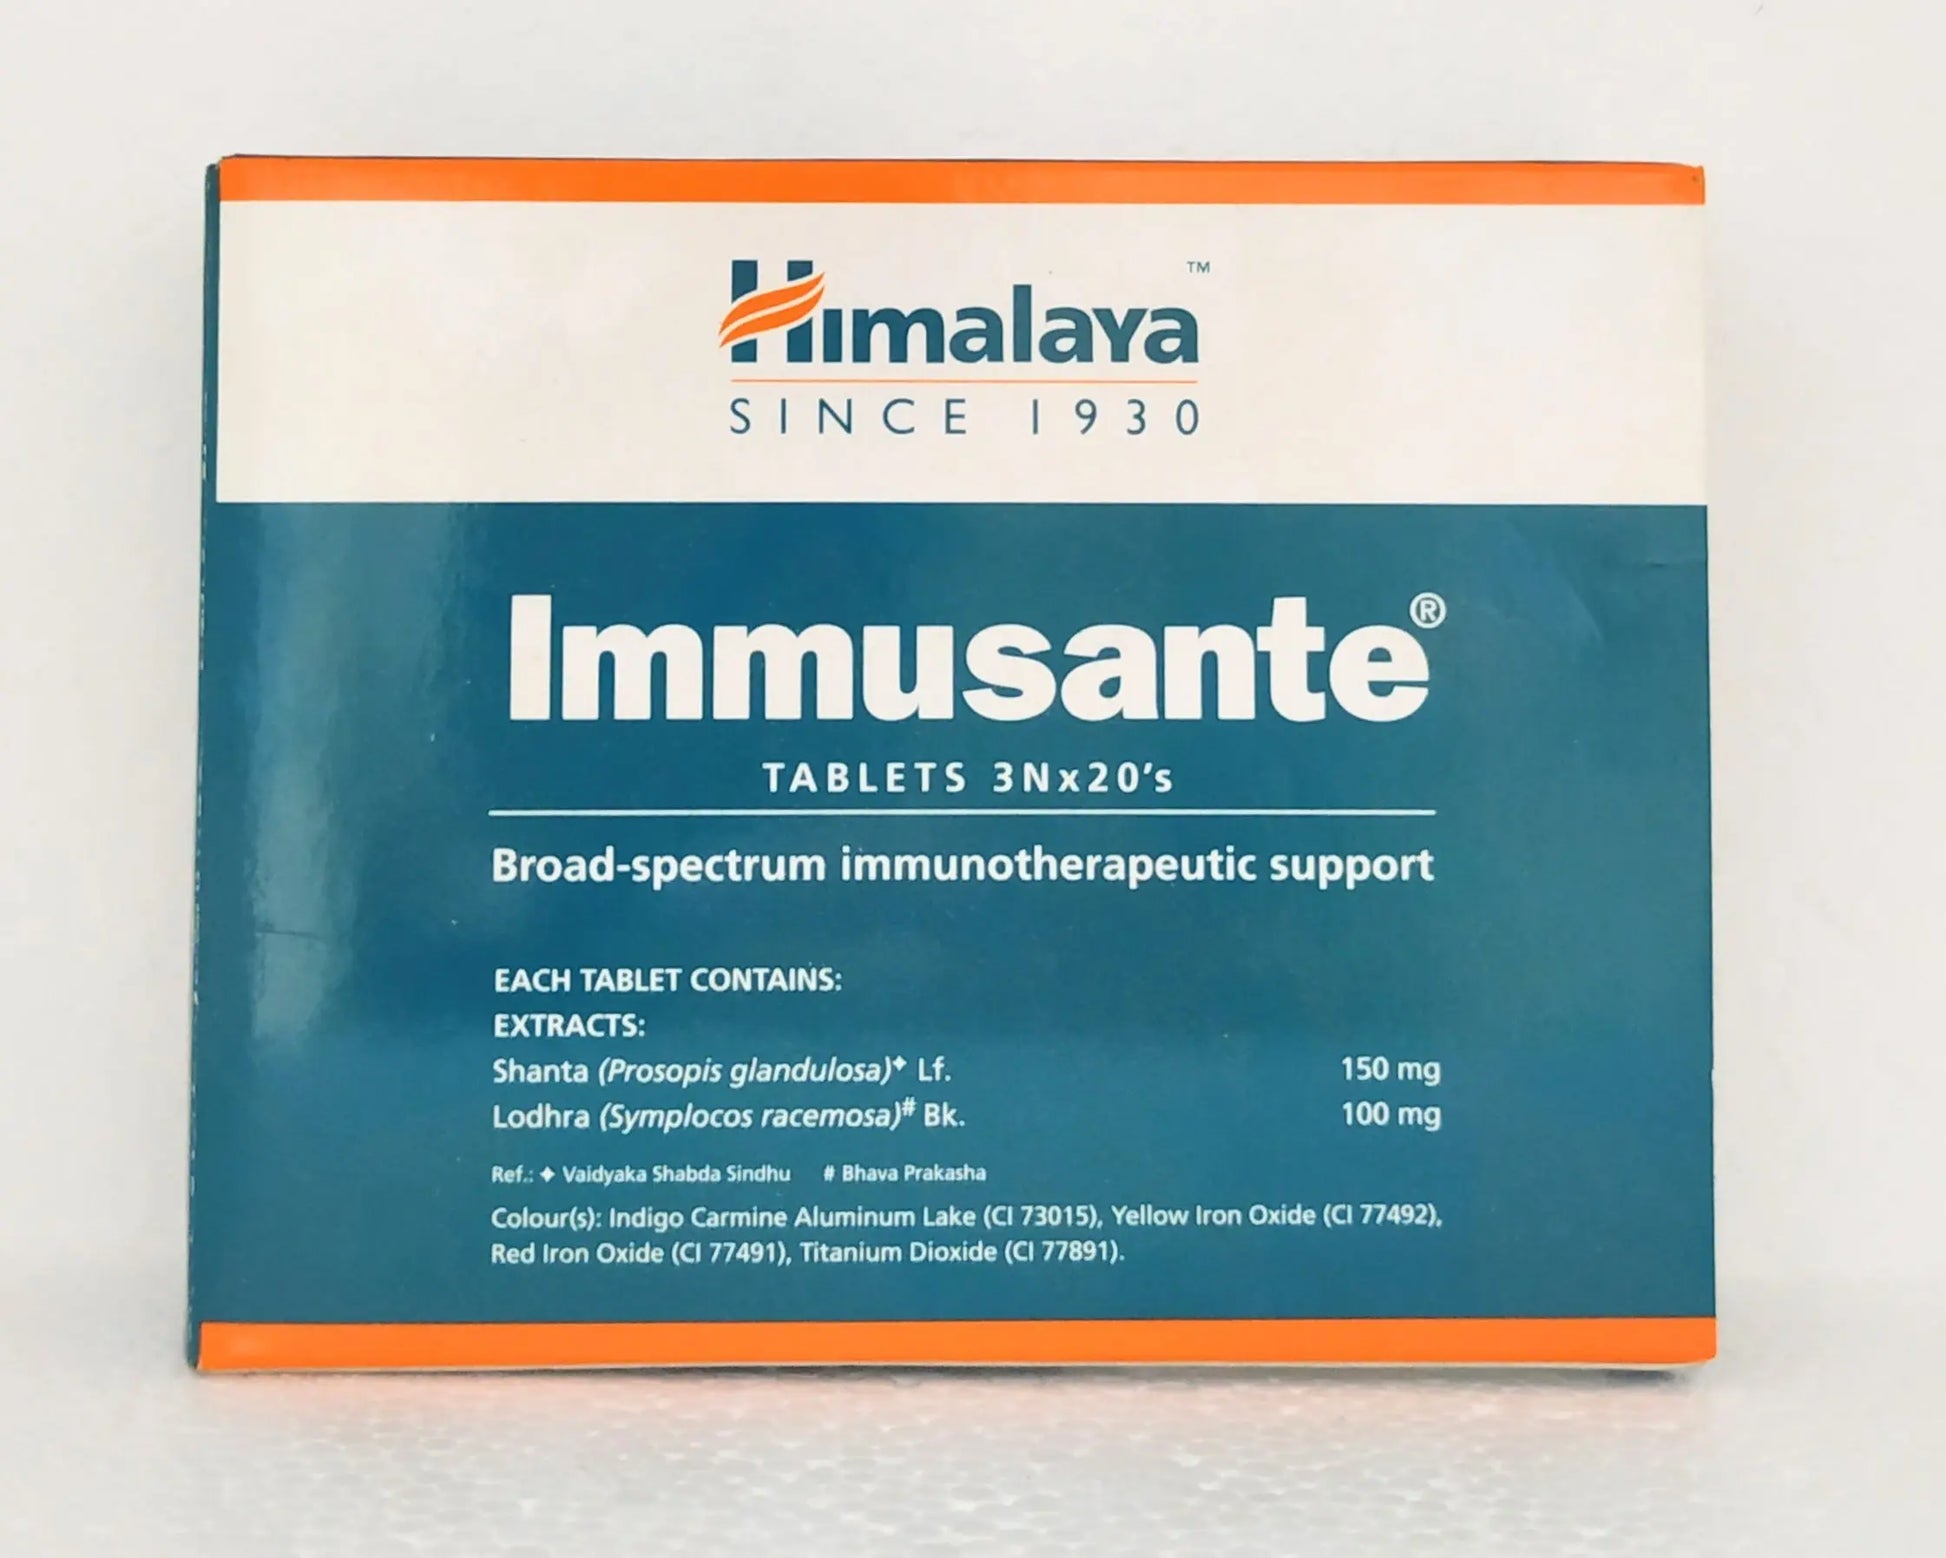 Immusante tablets - 20Tablets Himalaya